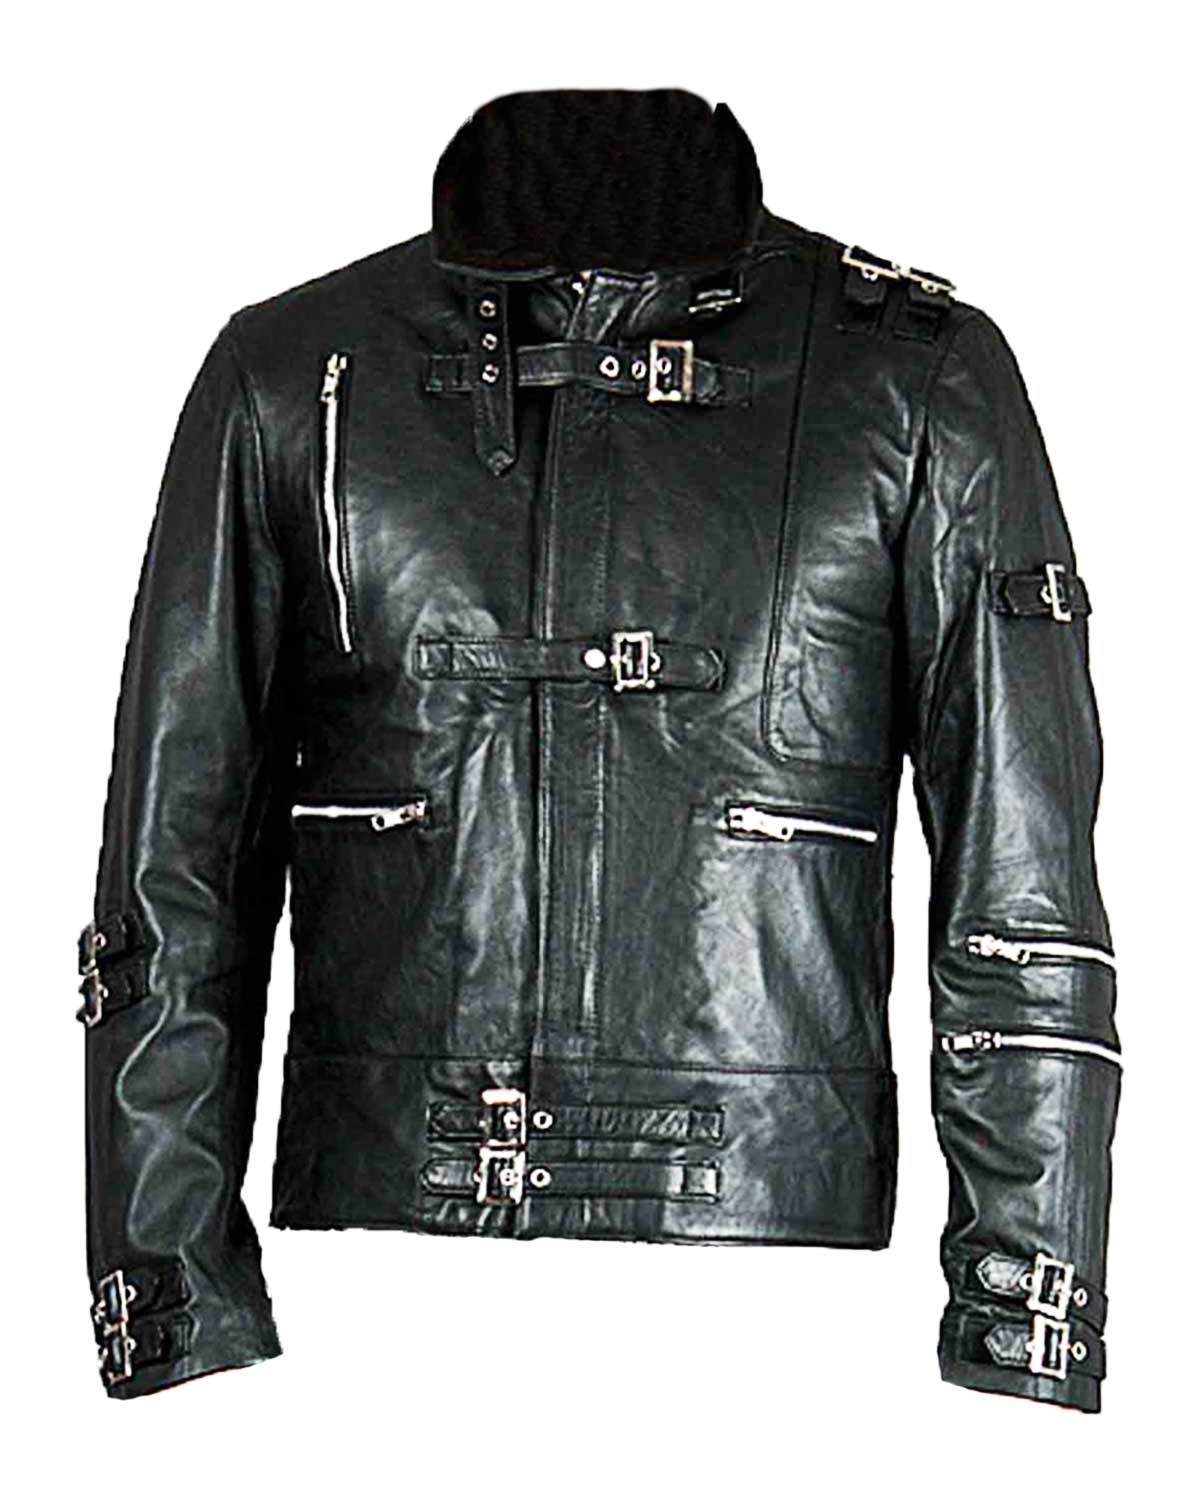 Bad Michael Jackson Black Leather Jacket | Elite Jacket